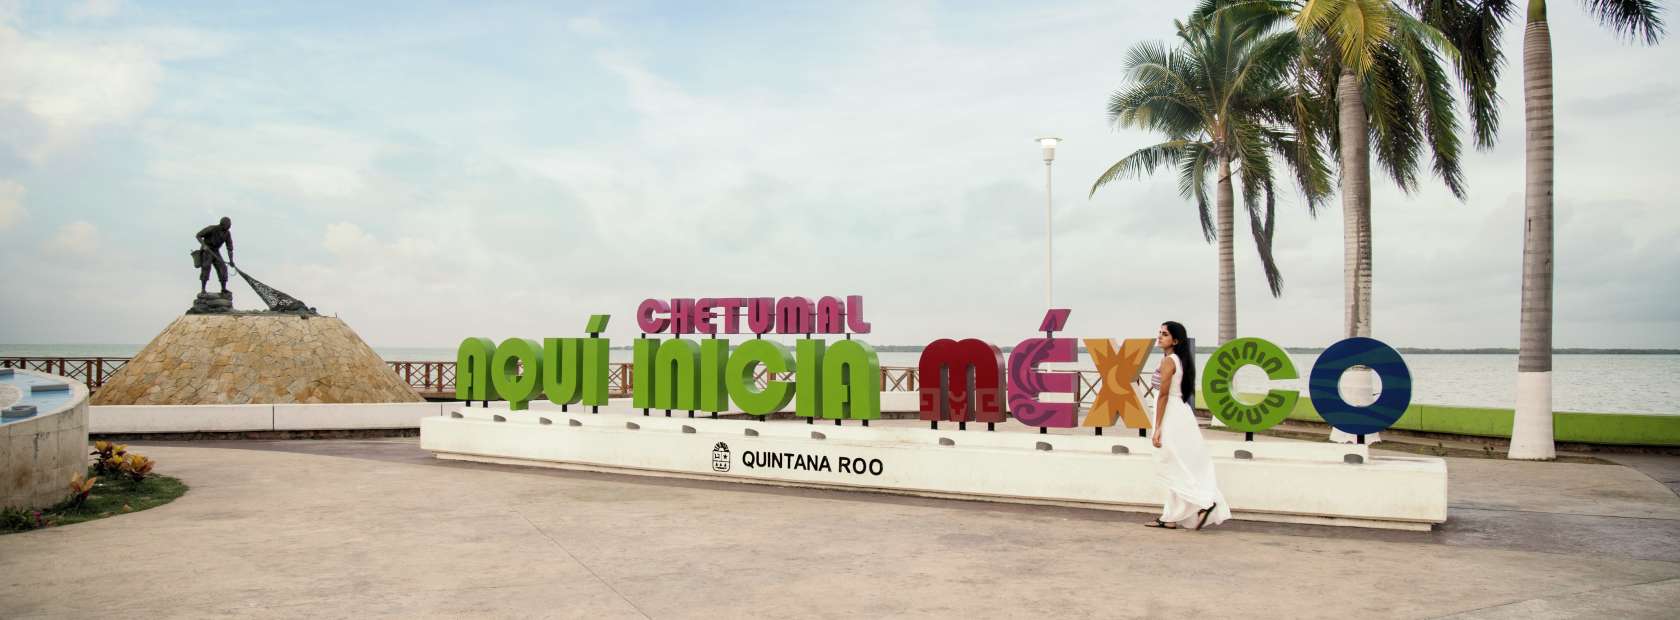 Woman In White Dress Walking Past Chetumal Novi Inicia Mexico Sign